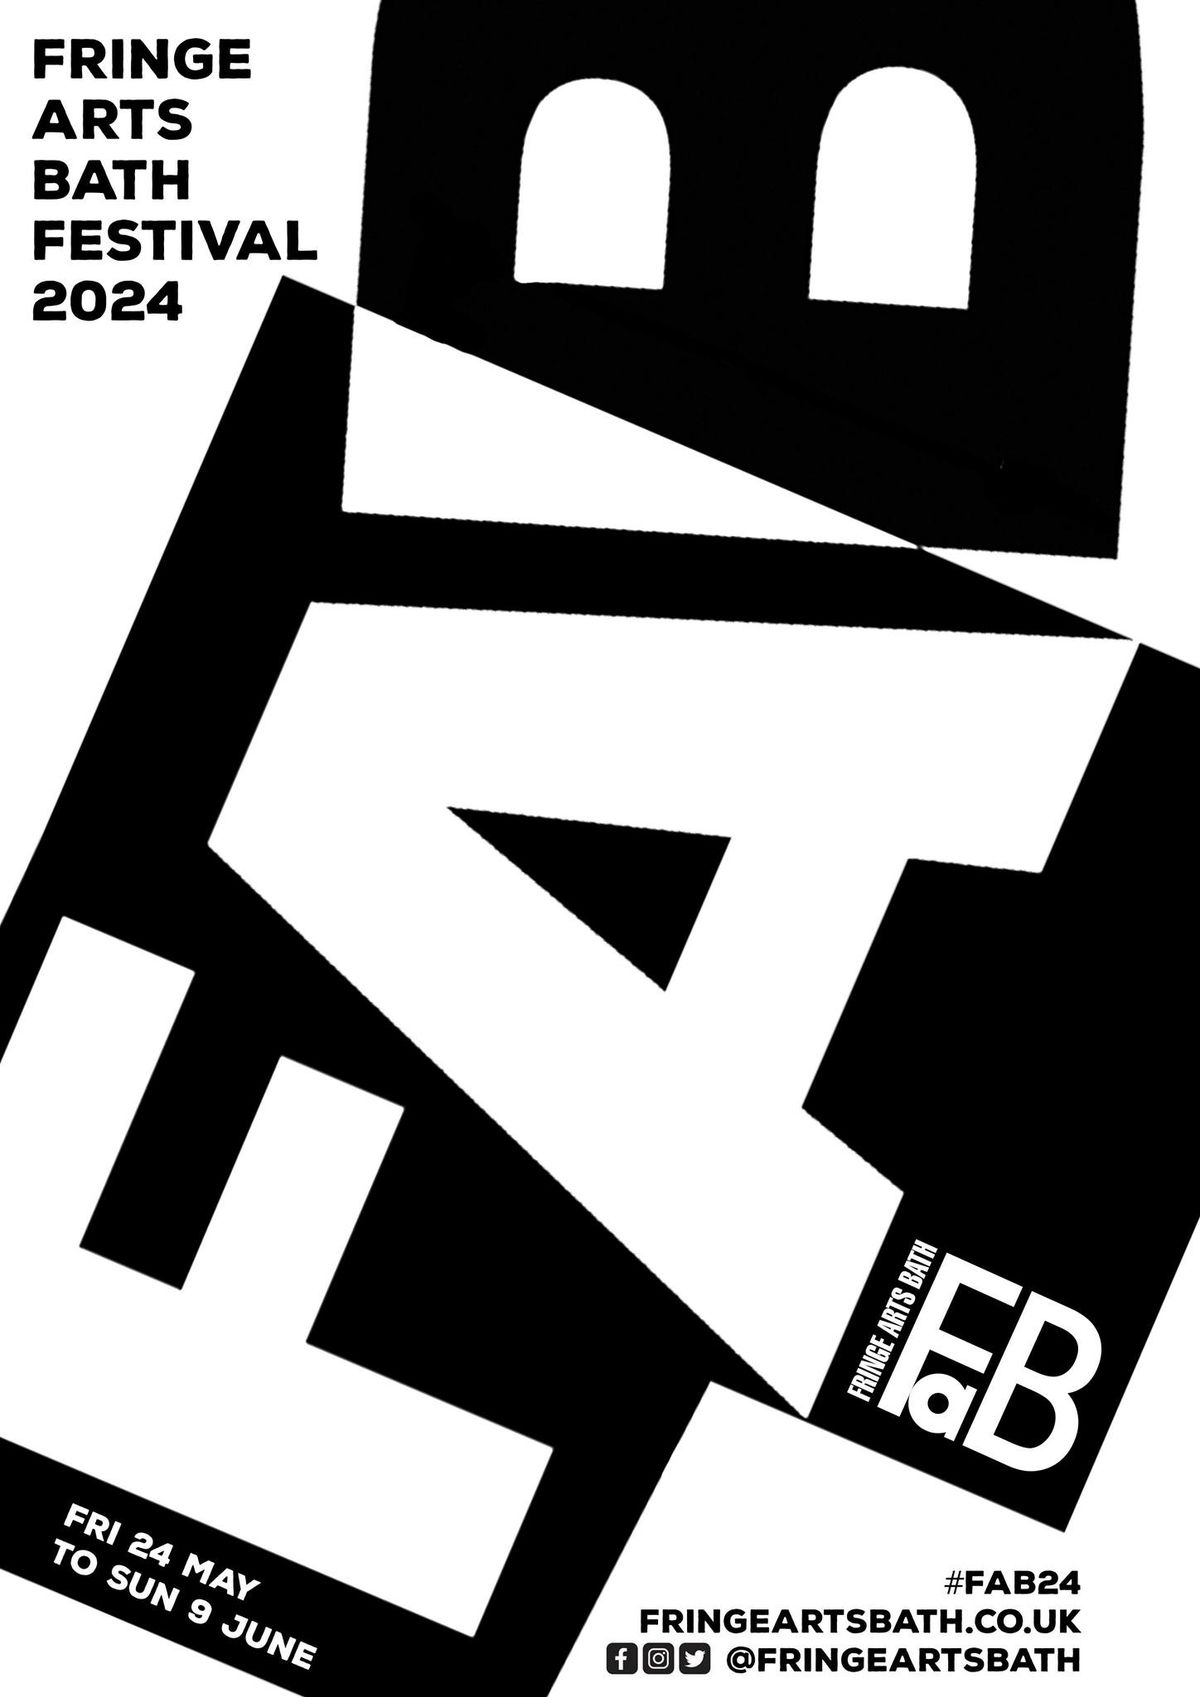 Fringe Arts Bath festival 2024 - 24 May to 8 June